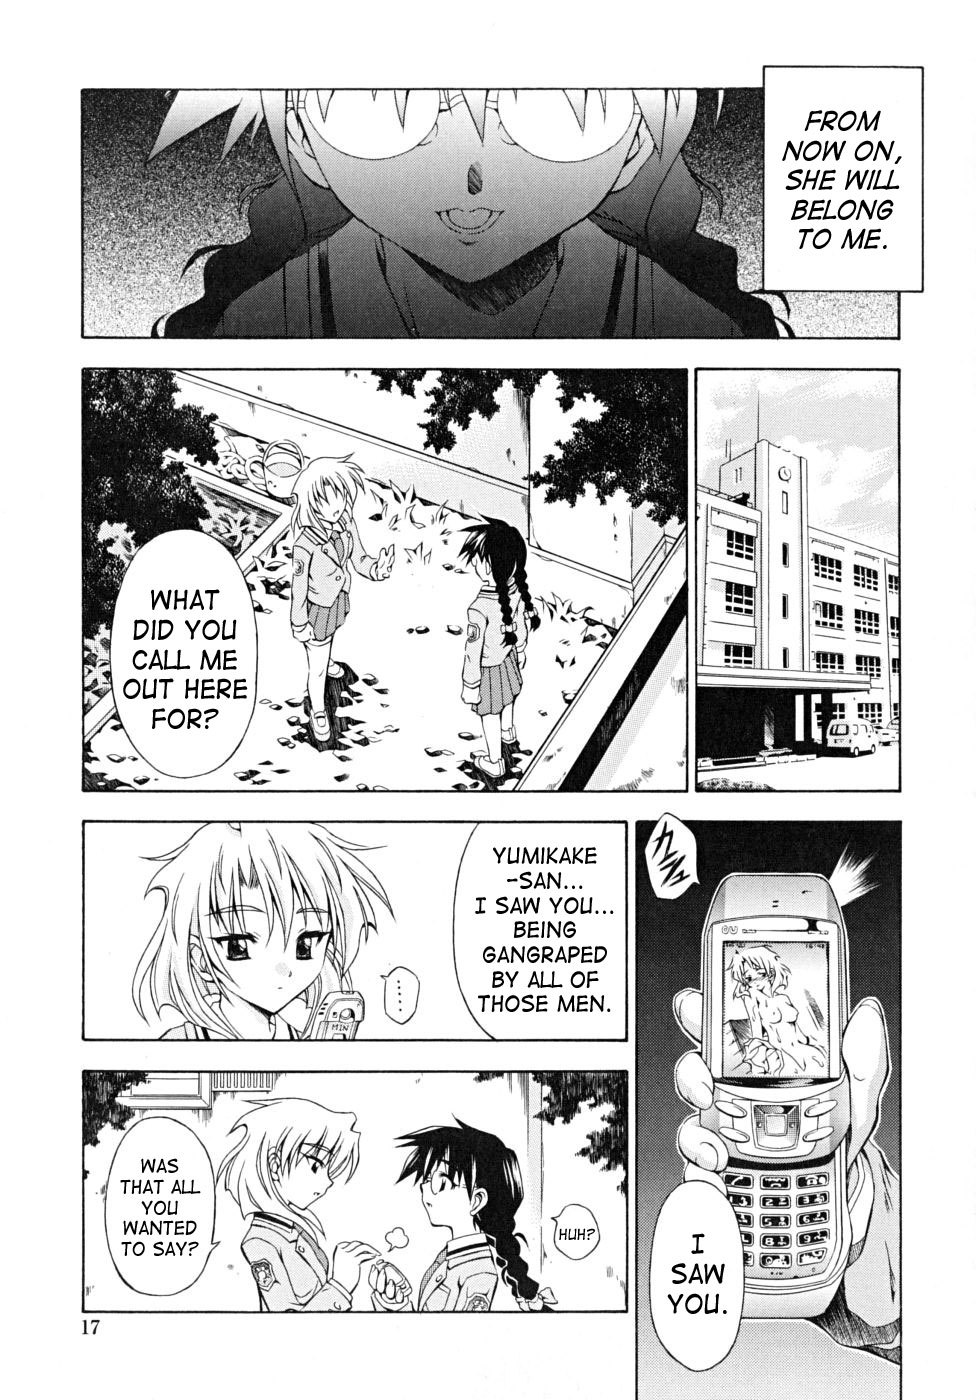 Binhou 10 hentai manga